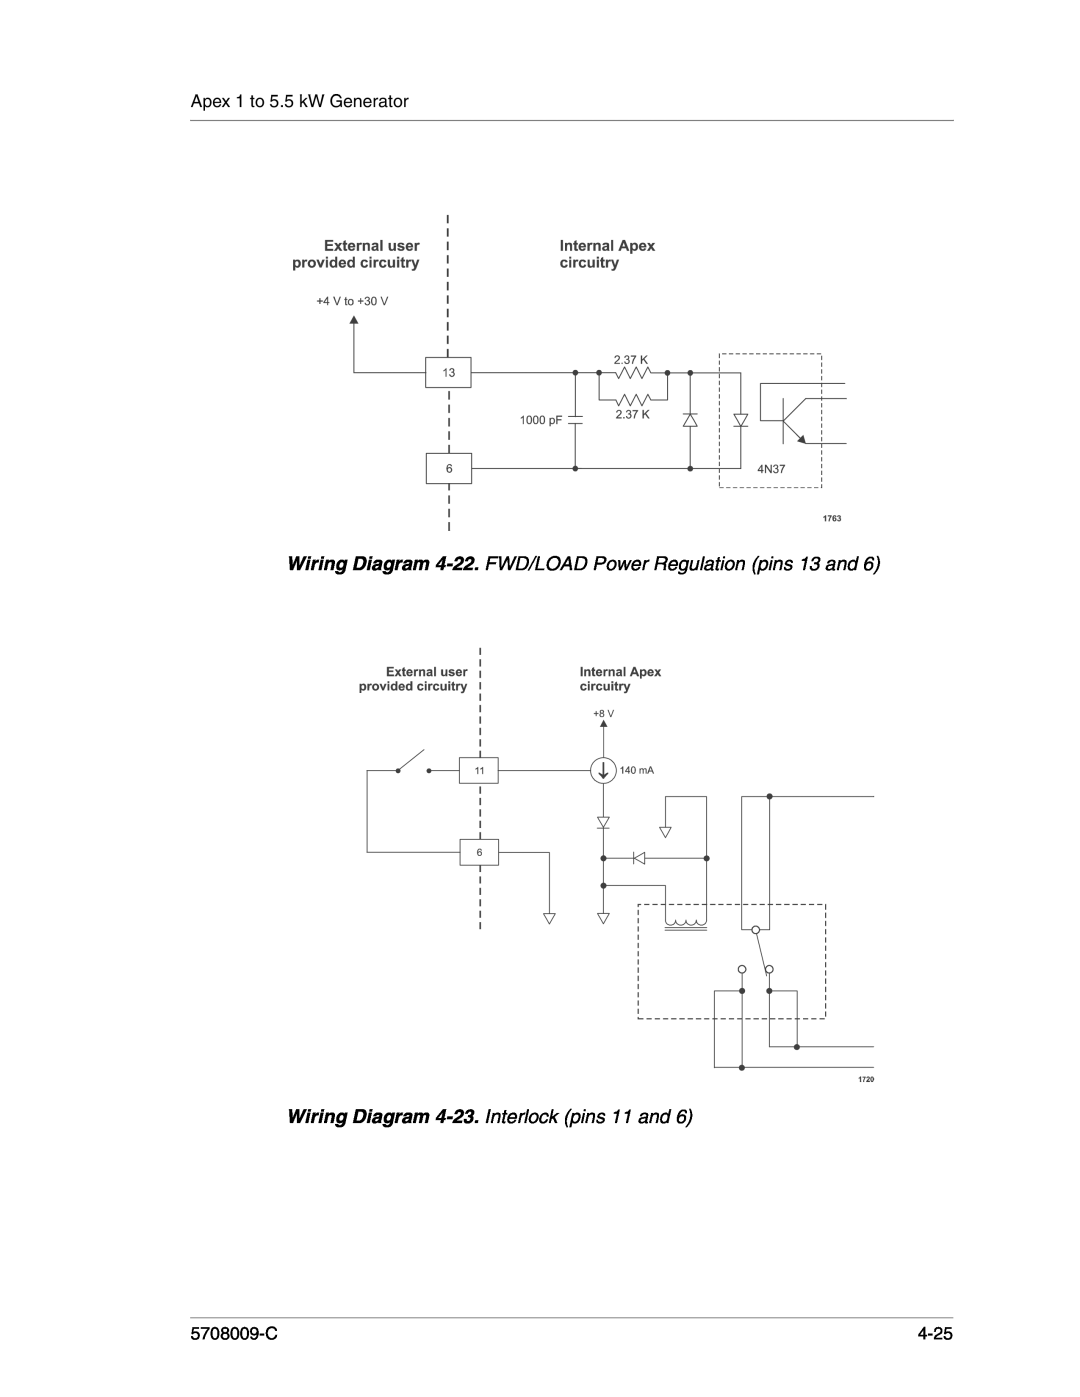 Apex Digital 5708009-C manual Wiring Diagram 4-22. FWD/LOAD Power Regulation pins 13 and, Apex 1 to 5.5 kW Generator, 4-25 